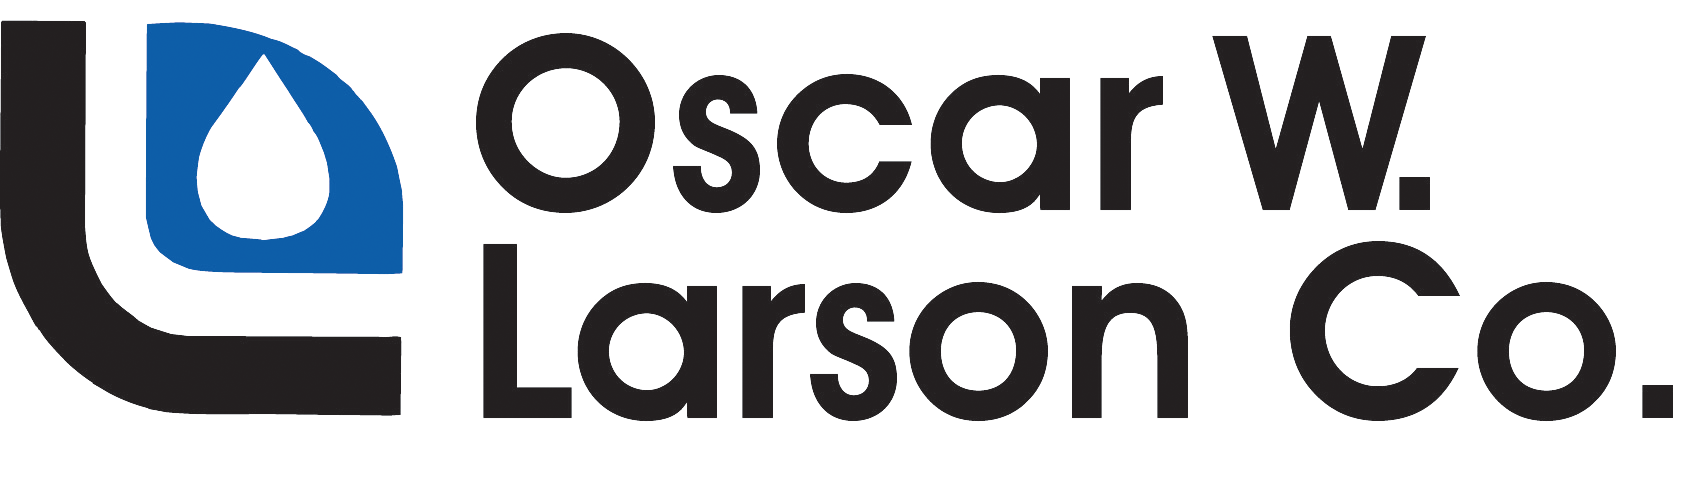 Standard Logo Oscar W. Larson Co.